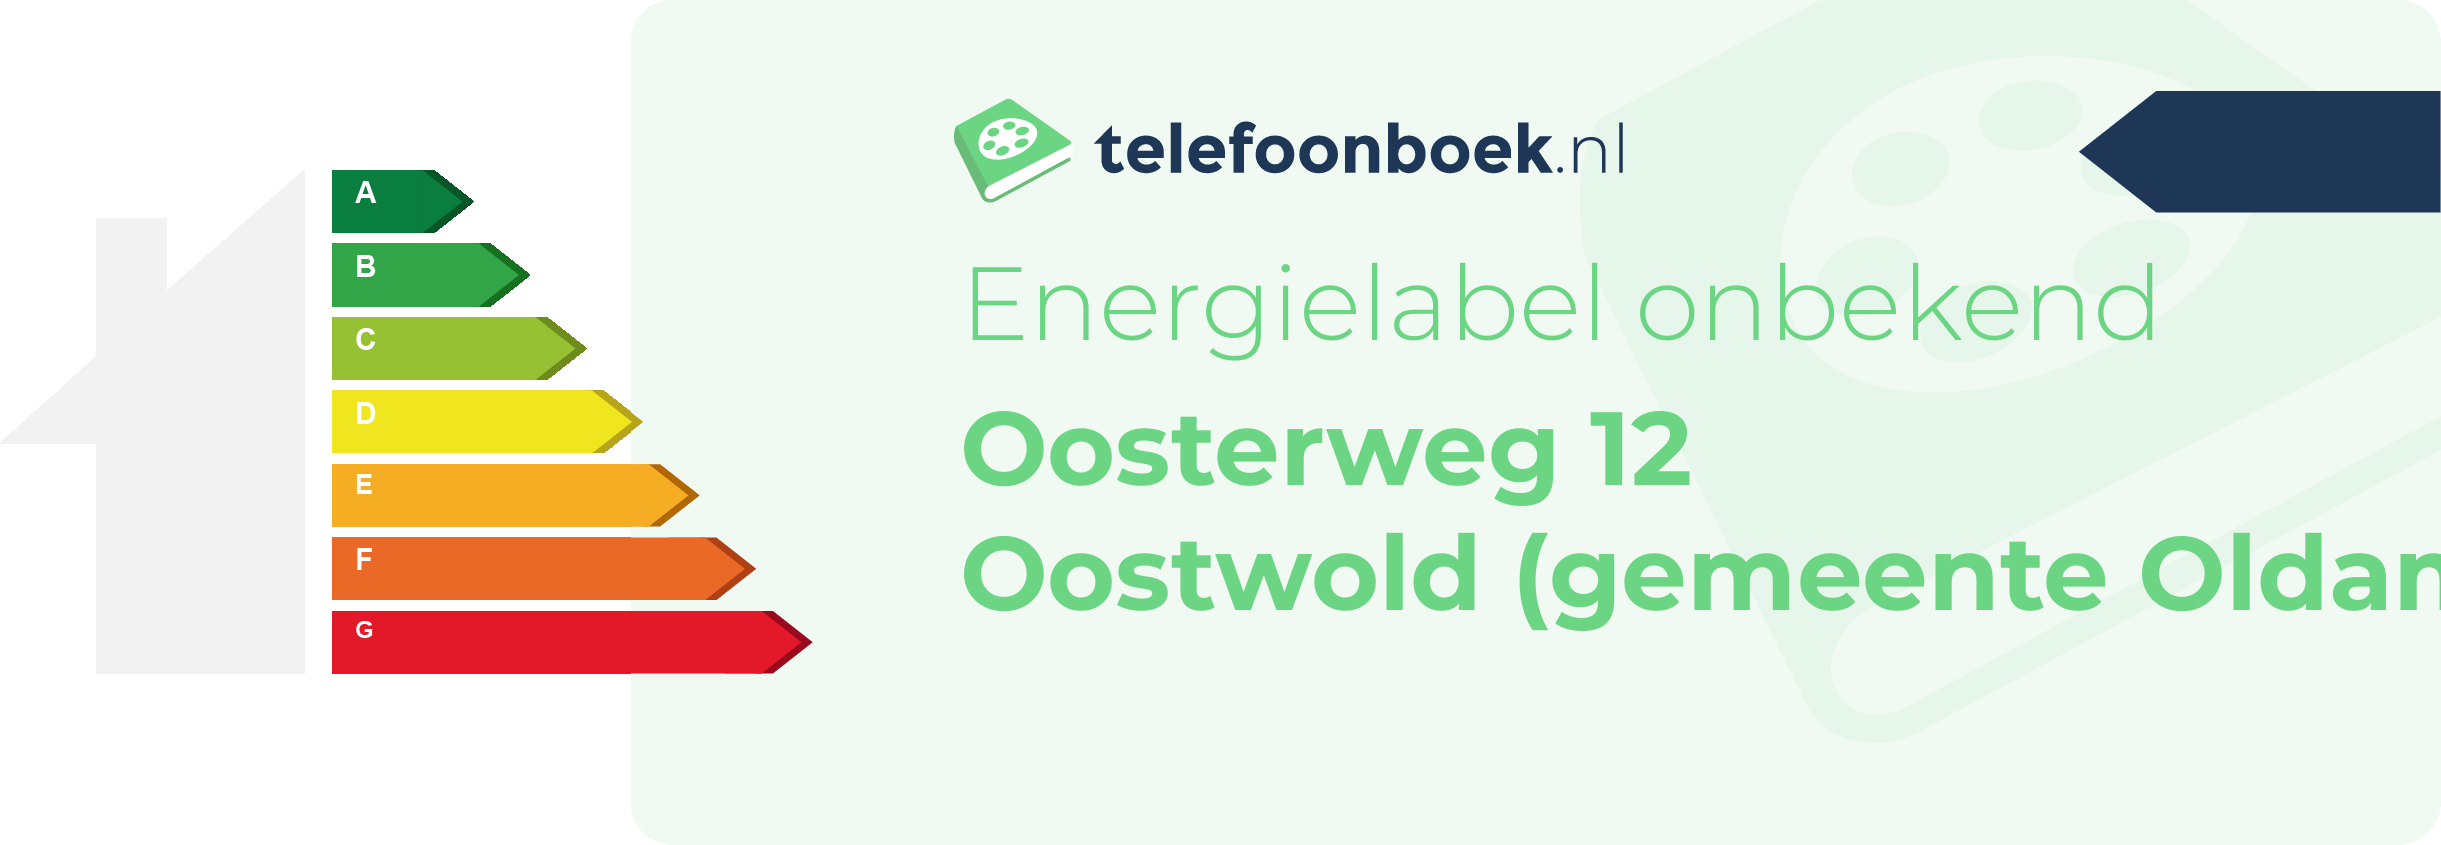 Energielabel Oosterweg 12 Oostwold (gemeente Oldambt Groningen)